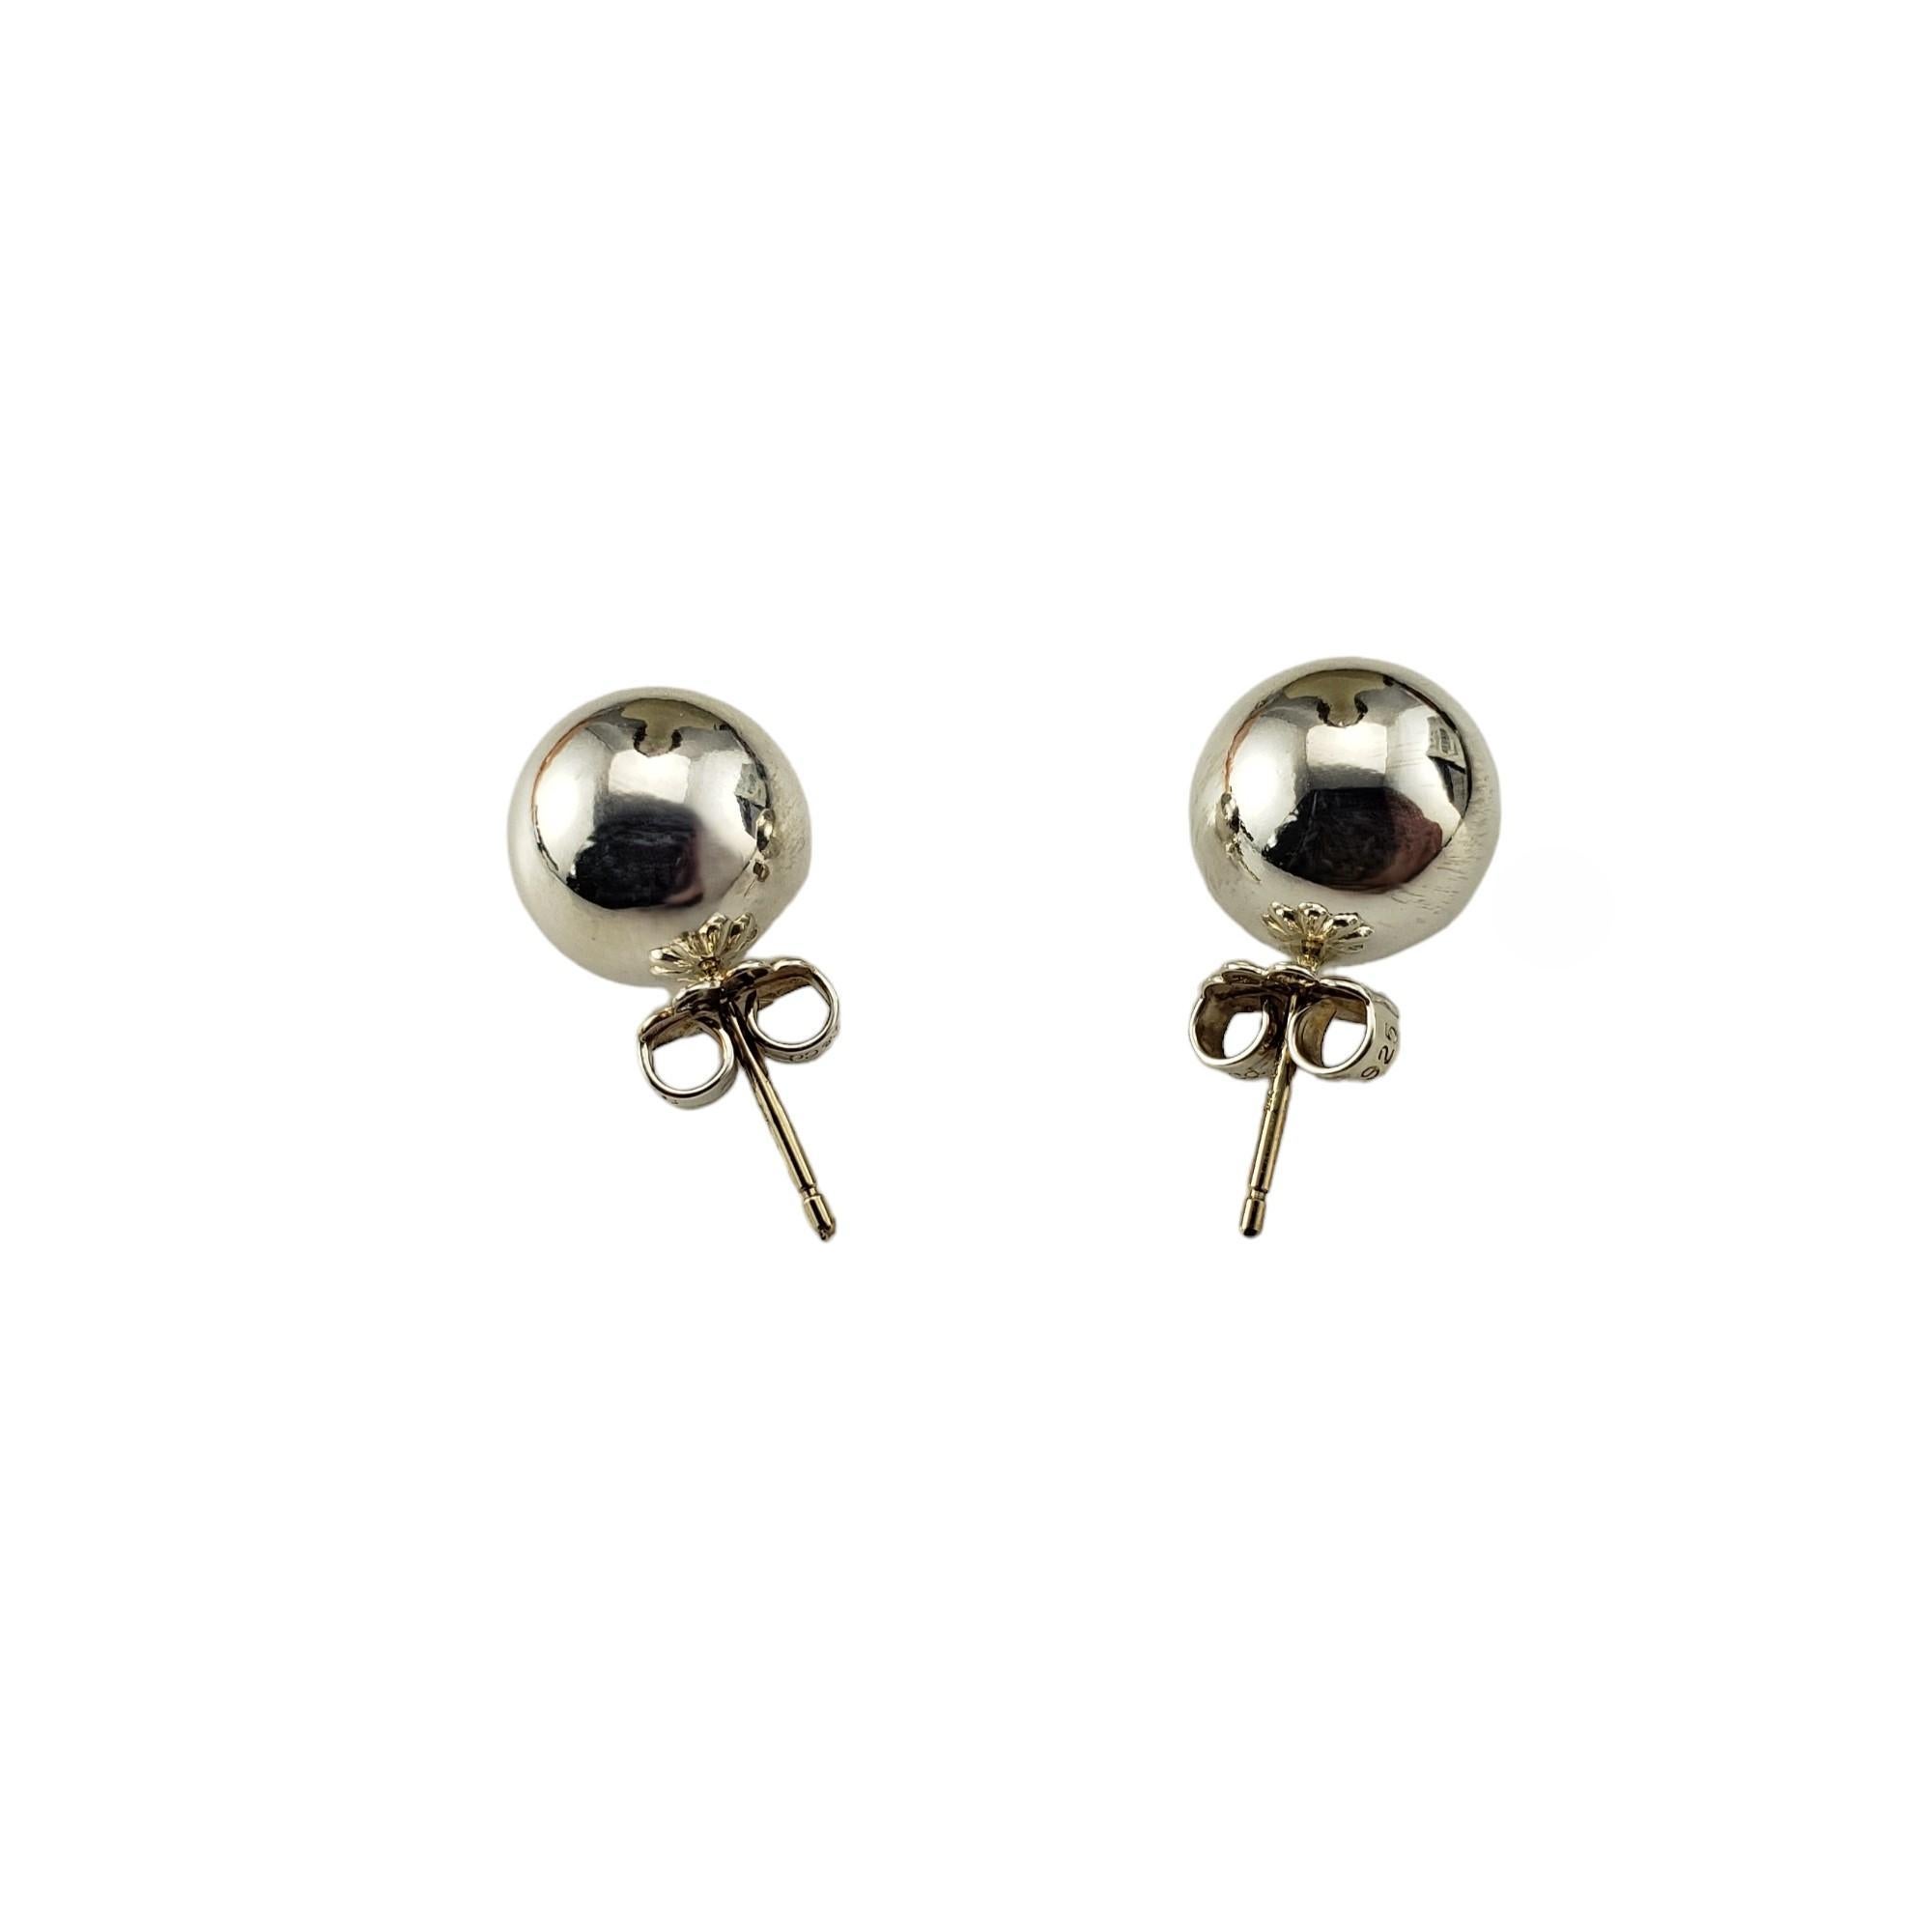 Tiffany & Co. Sterling Silver Ball 10mm Earrings #17163 For Sale 1